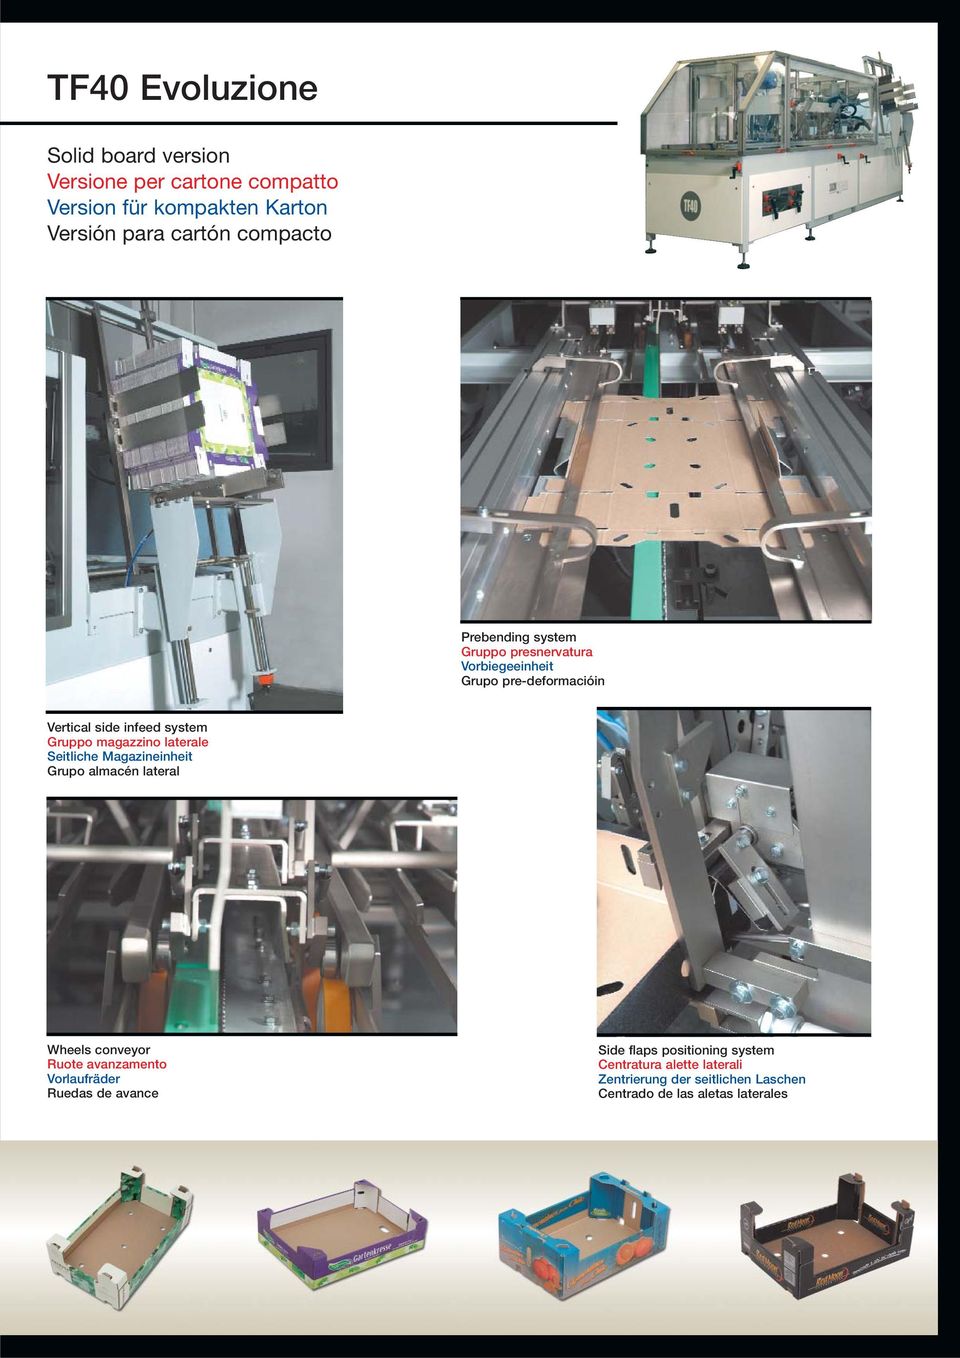 magazzino laterale Seitliche Magazineinheit Grupo almacén lateral Wheels conveyor Ruote avanzamento Vorlaufräder Ruedas de